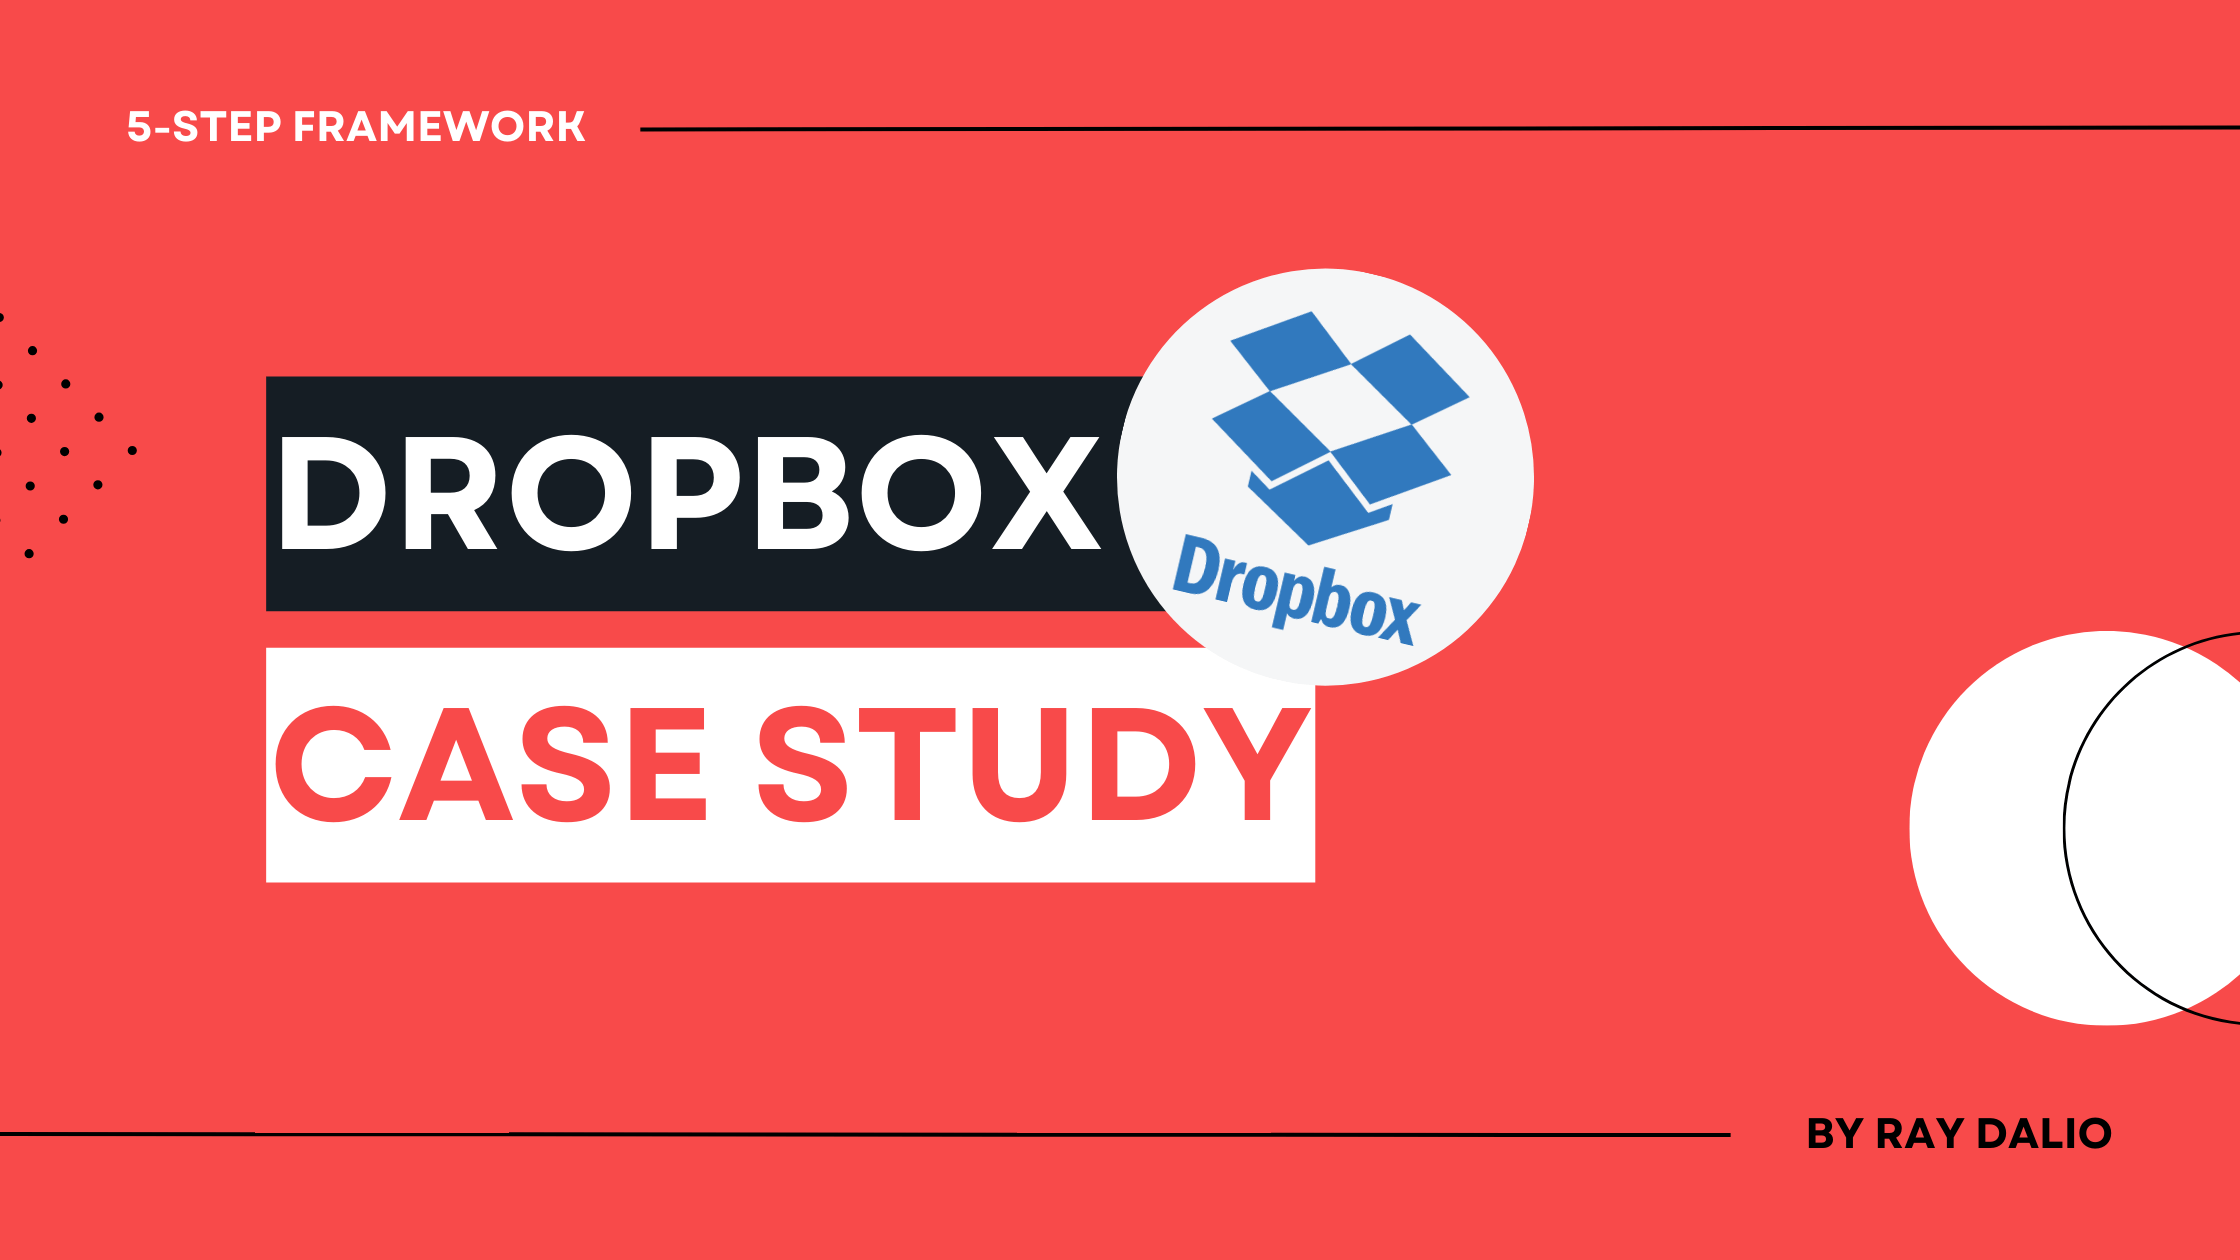 Dropbox case study